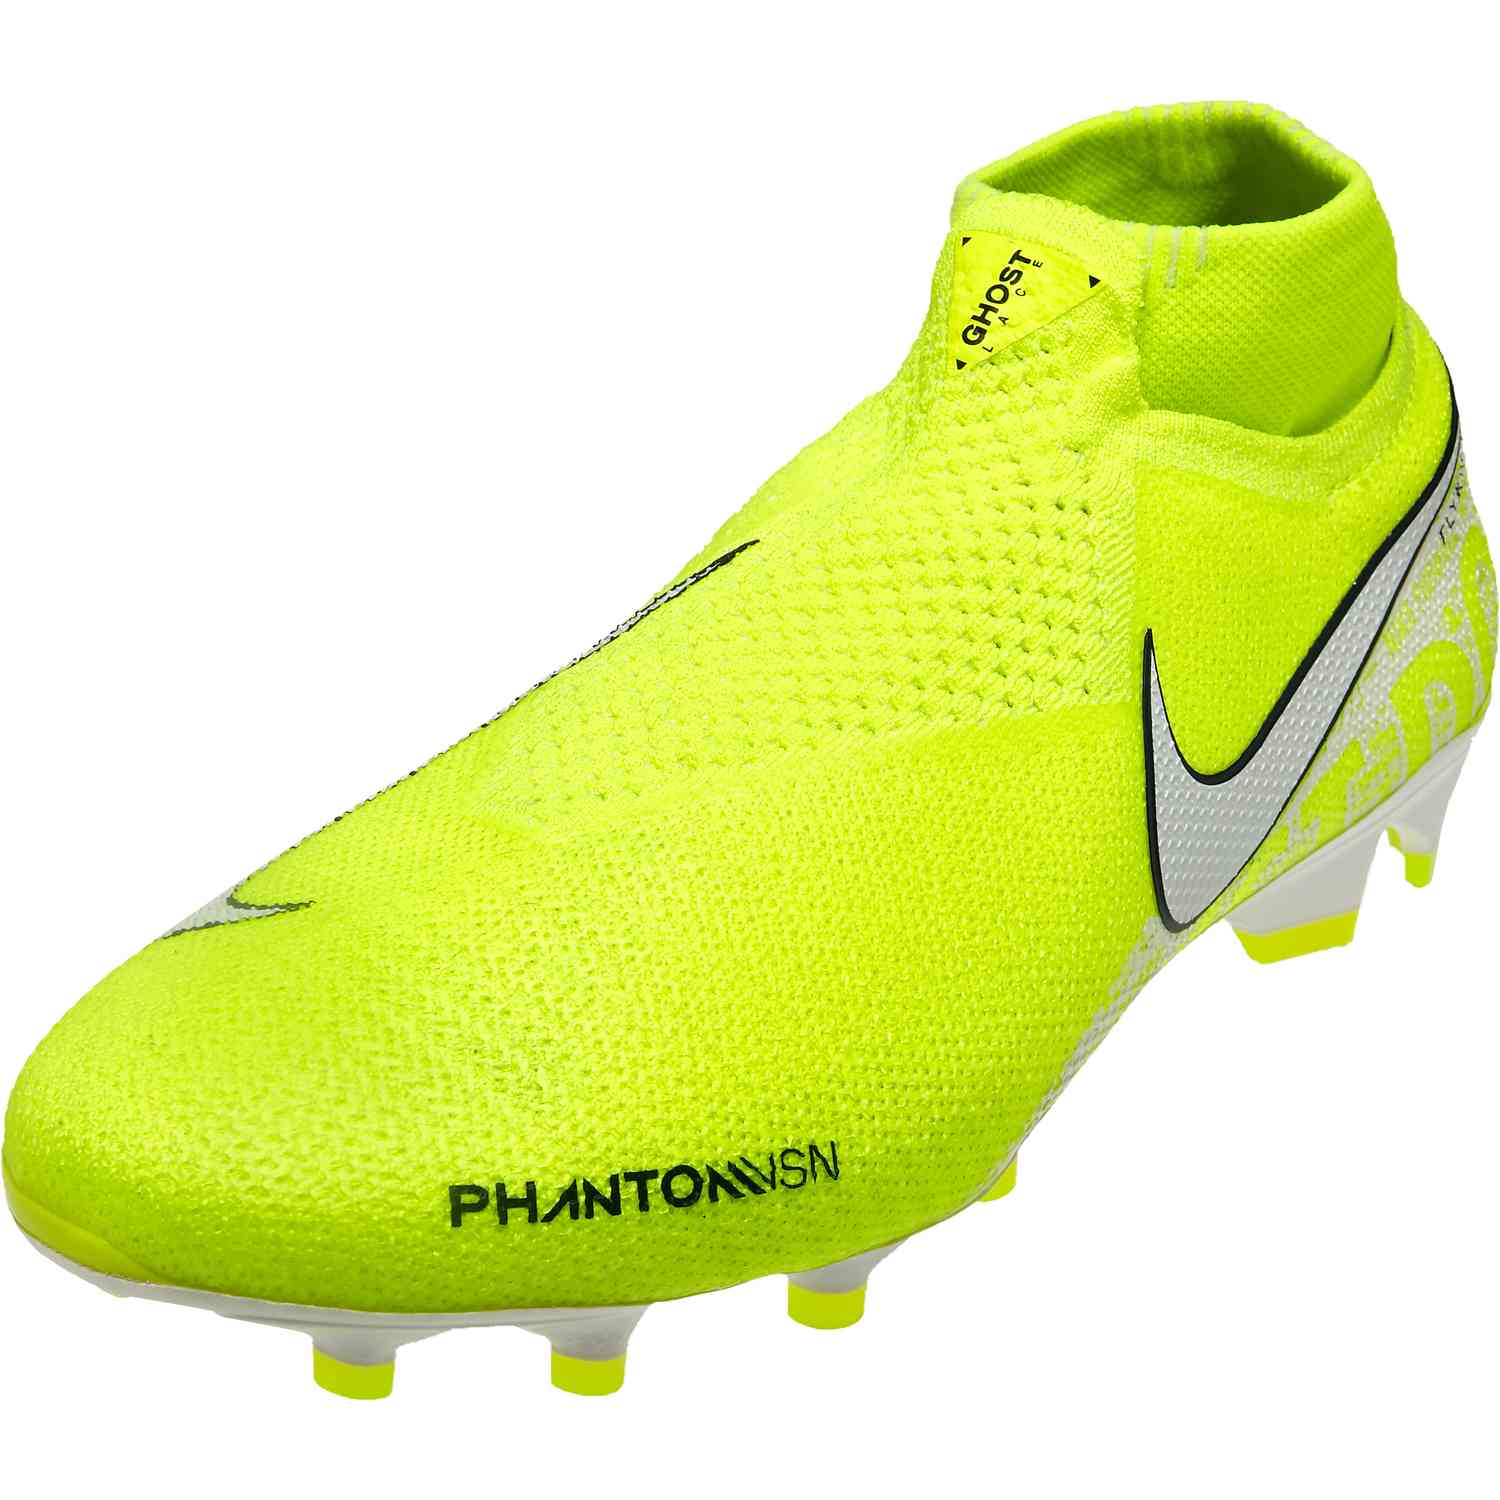 nike phantom vision elite dynamic fit fg soccer cleats